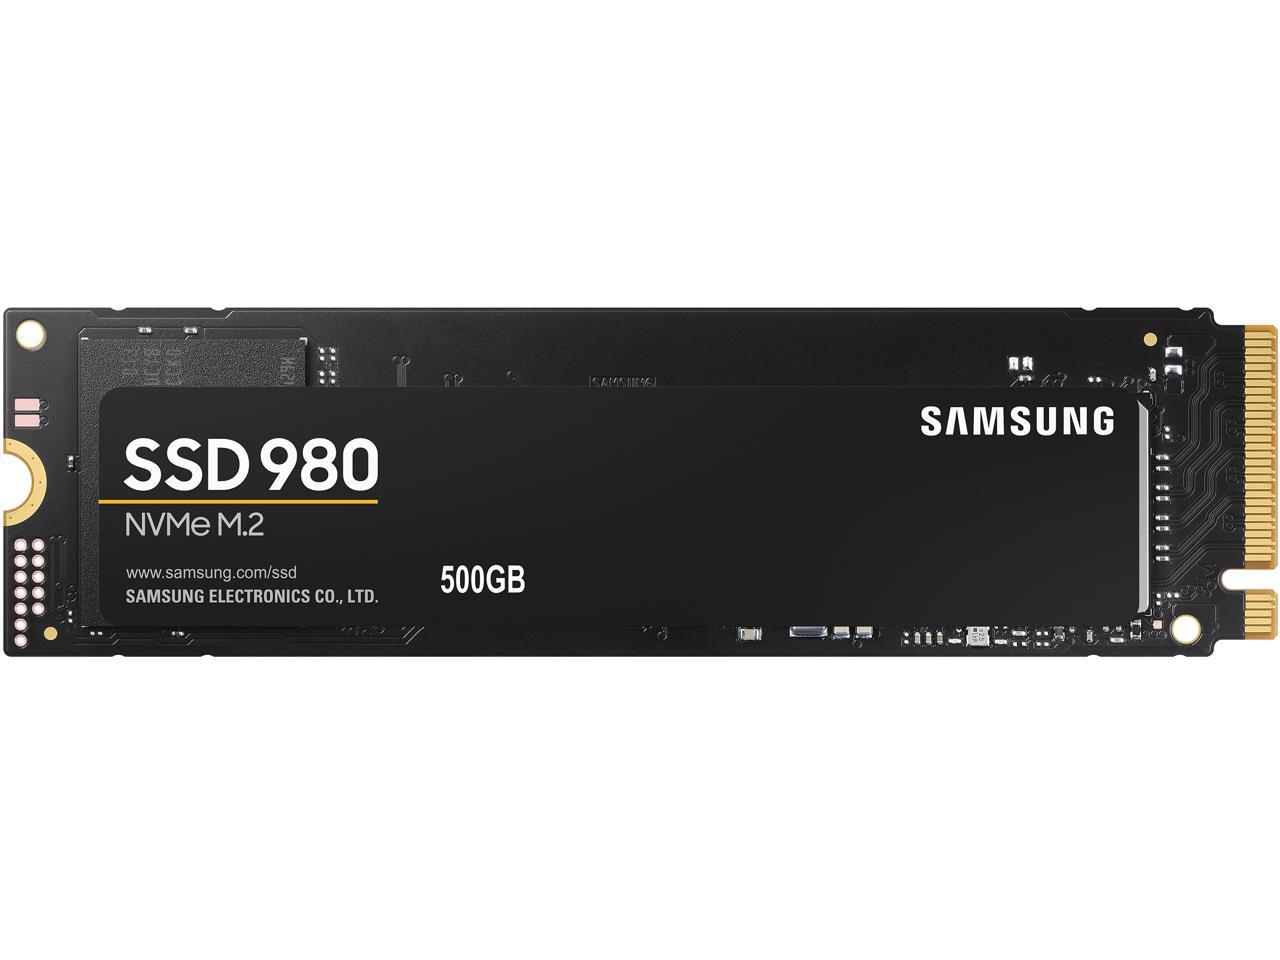 500GB Samsung 980 NVMe SSD $48